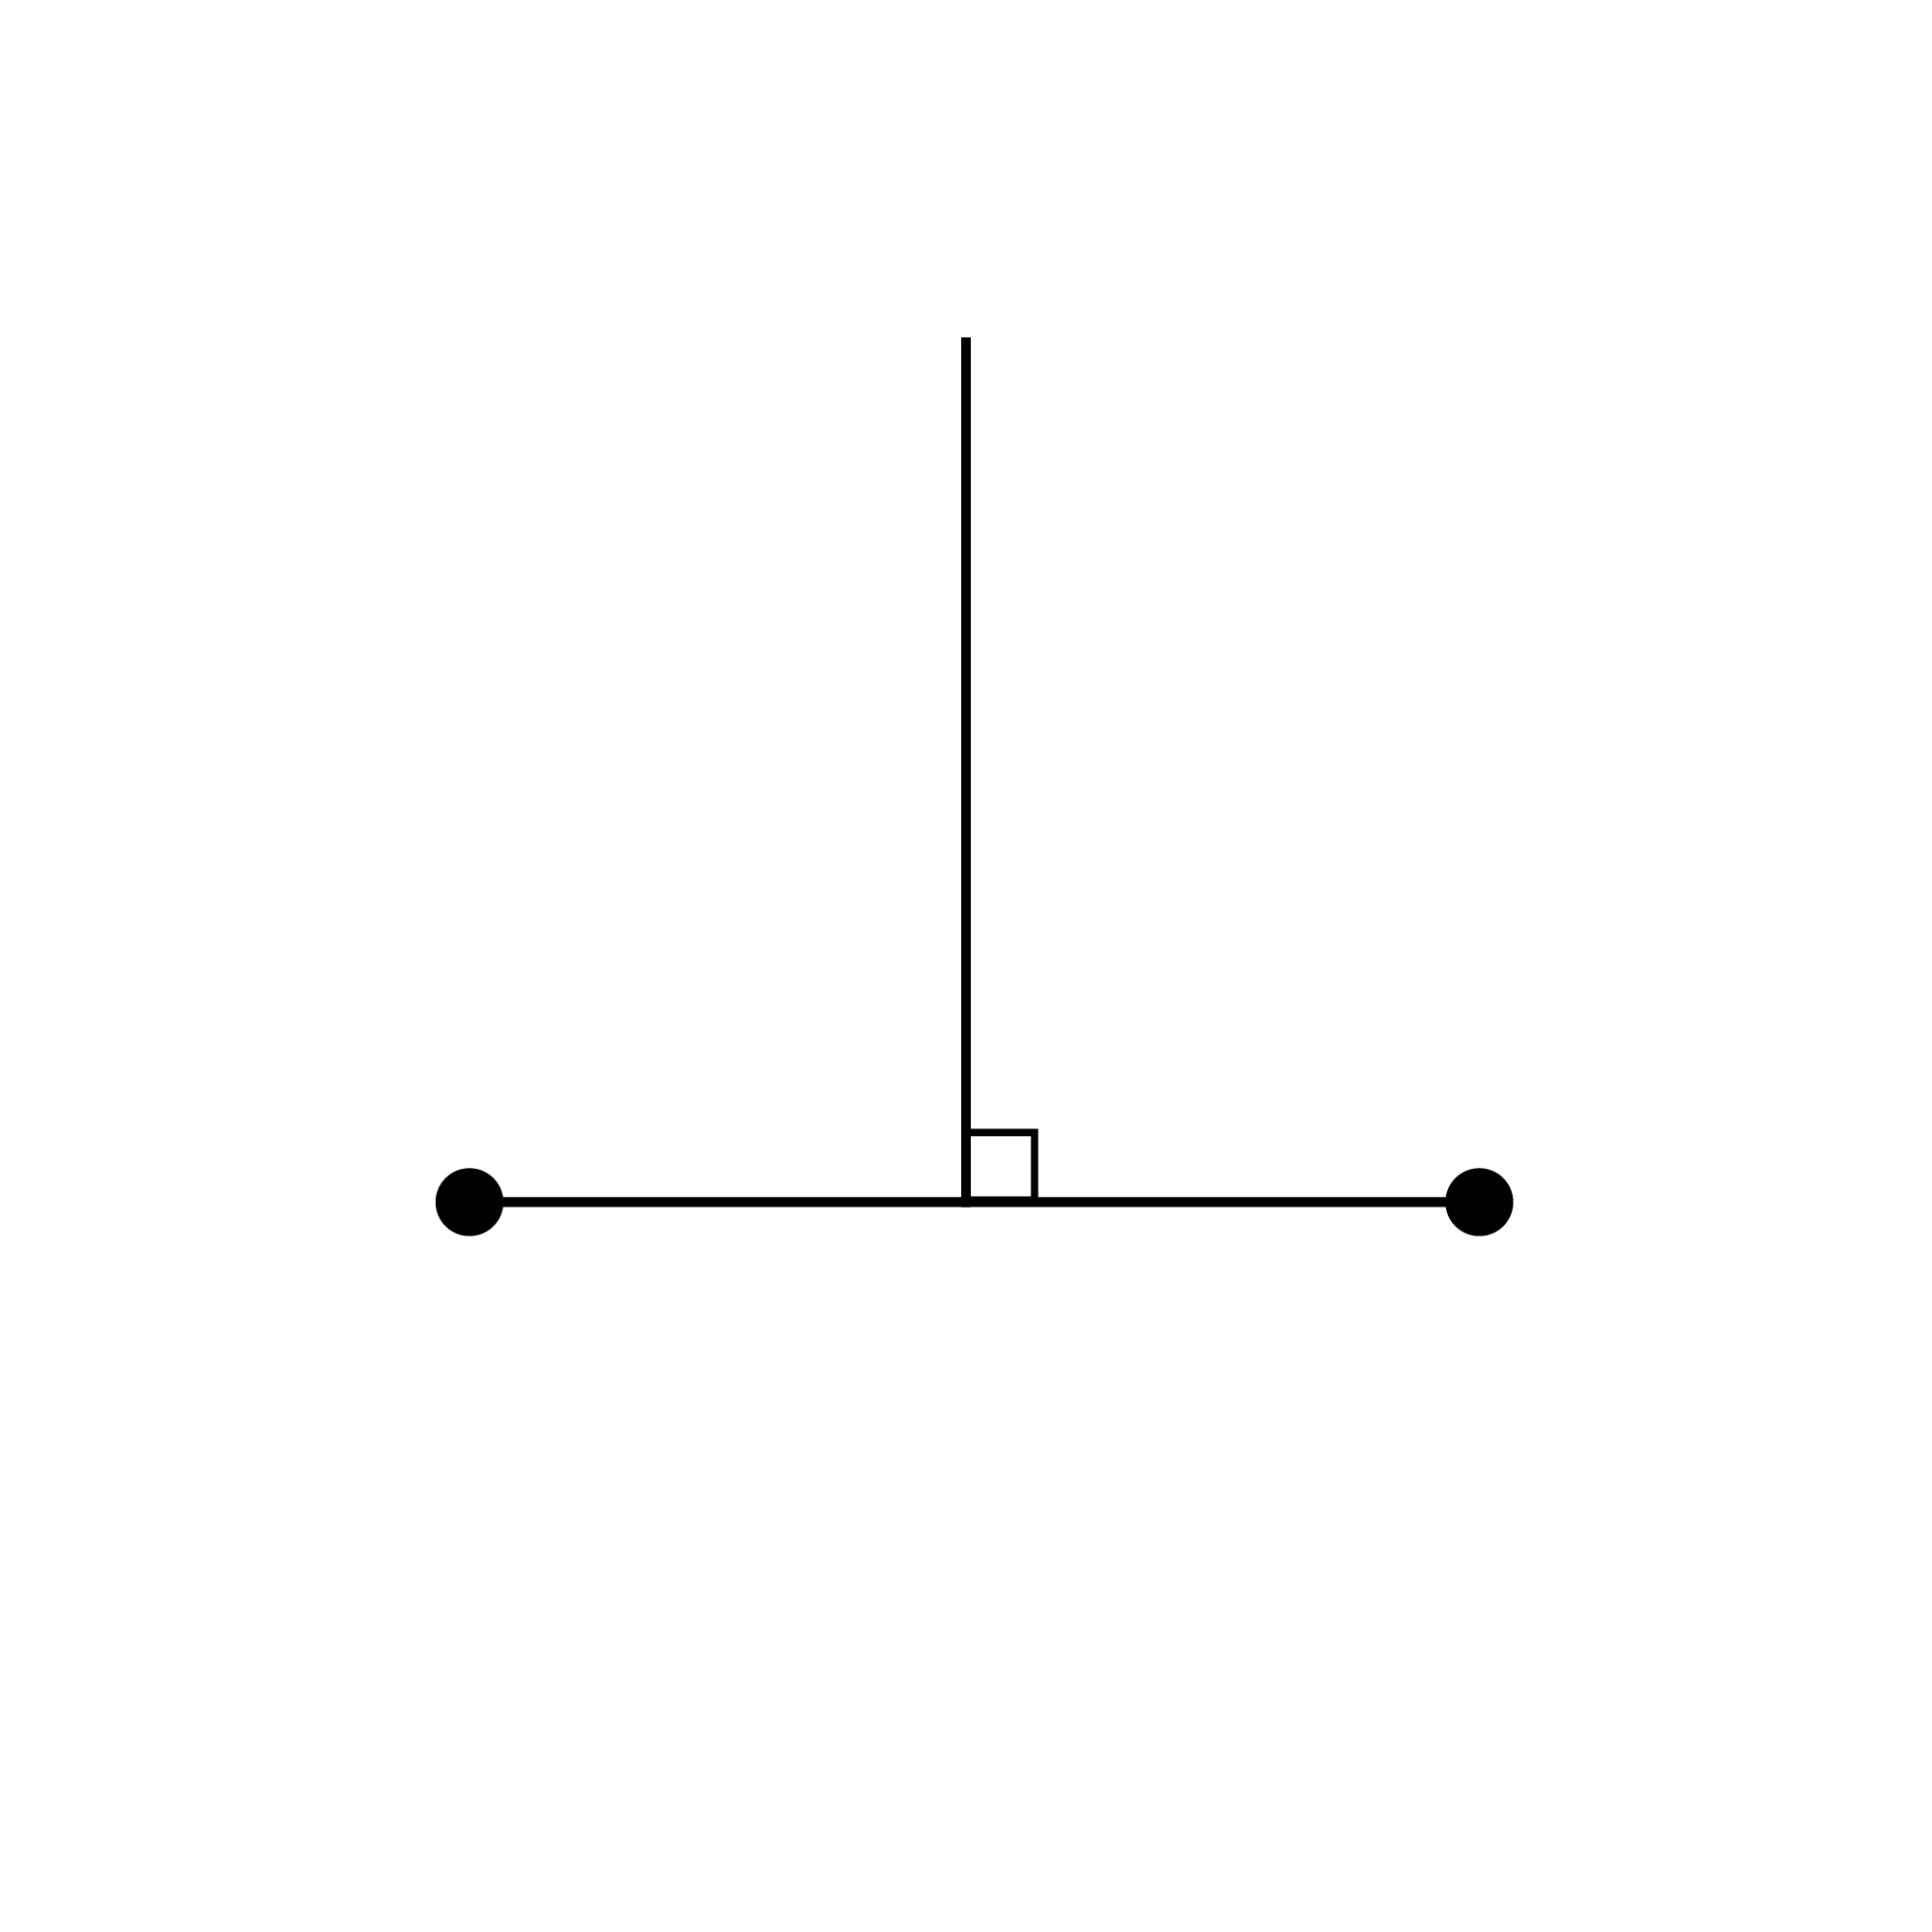 Right angle on line segment